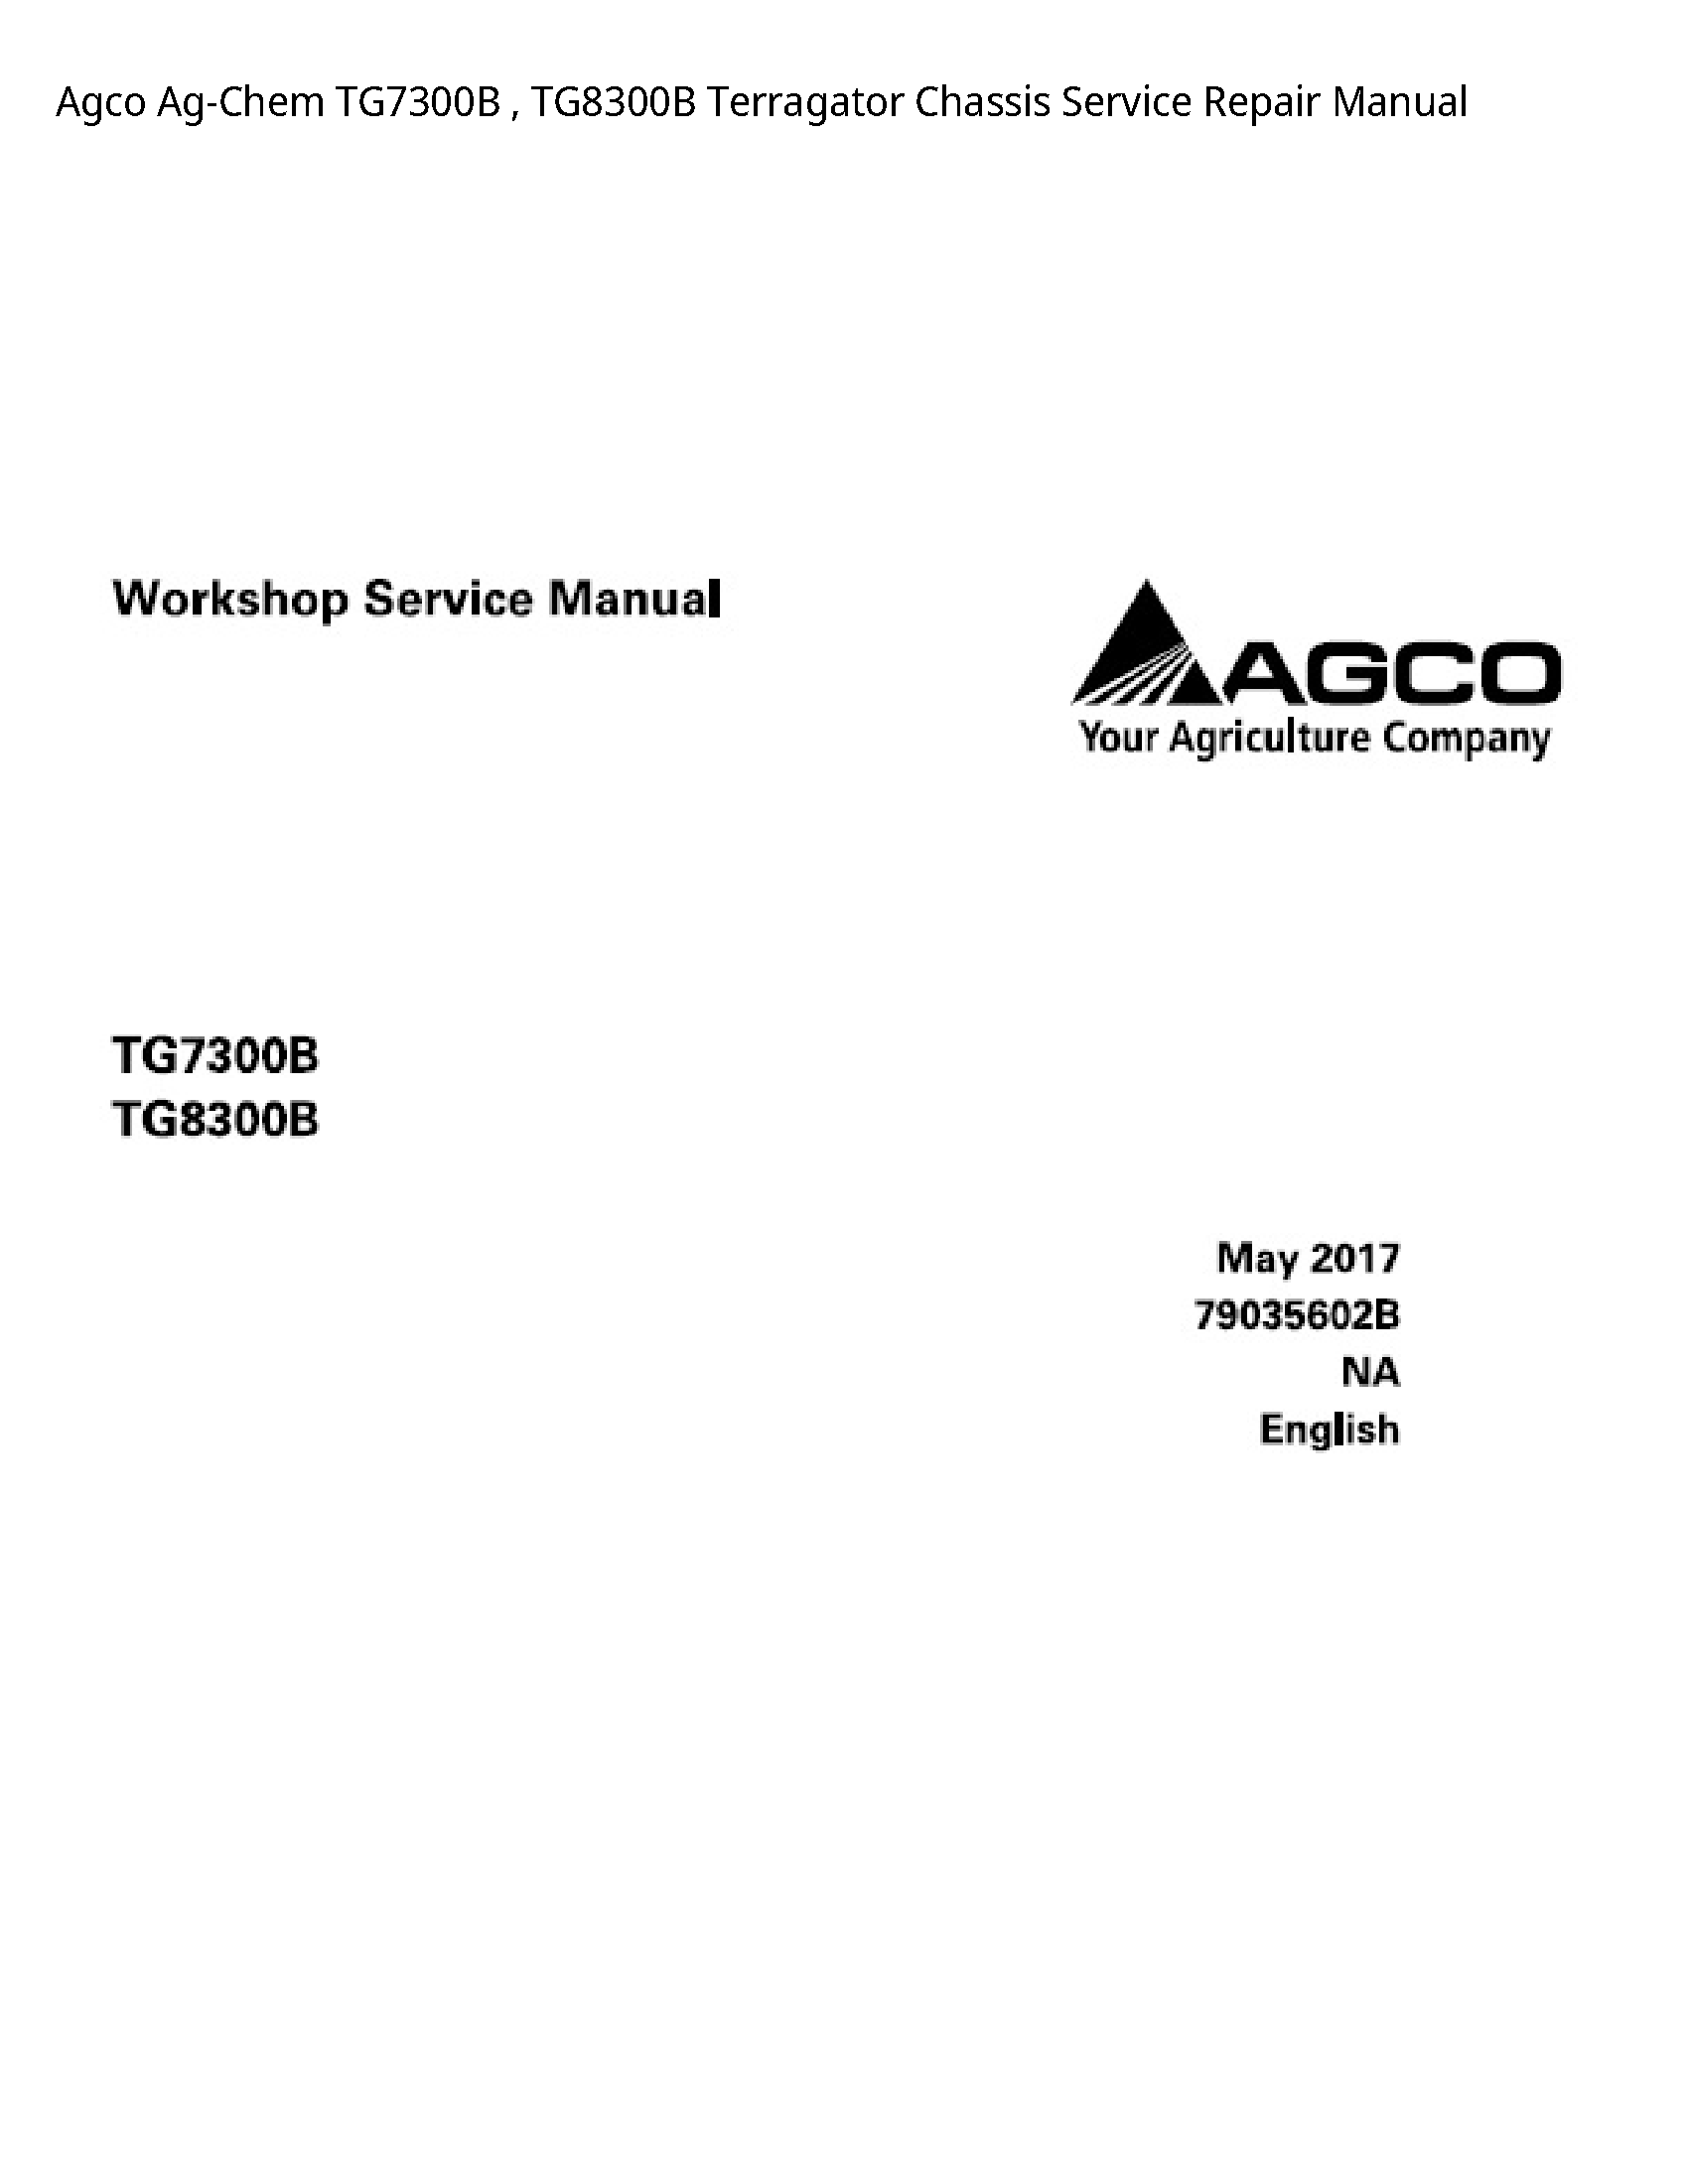 AGCO TG7300B Ag-Chem Terragator Chassis manual